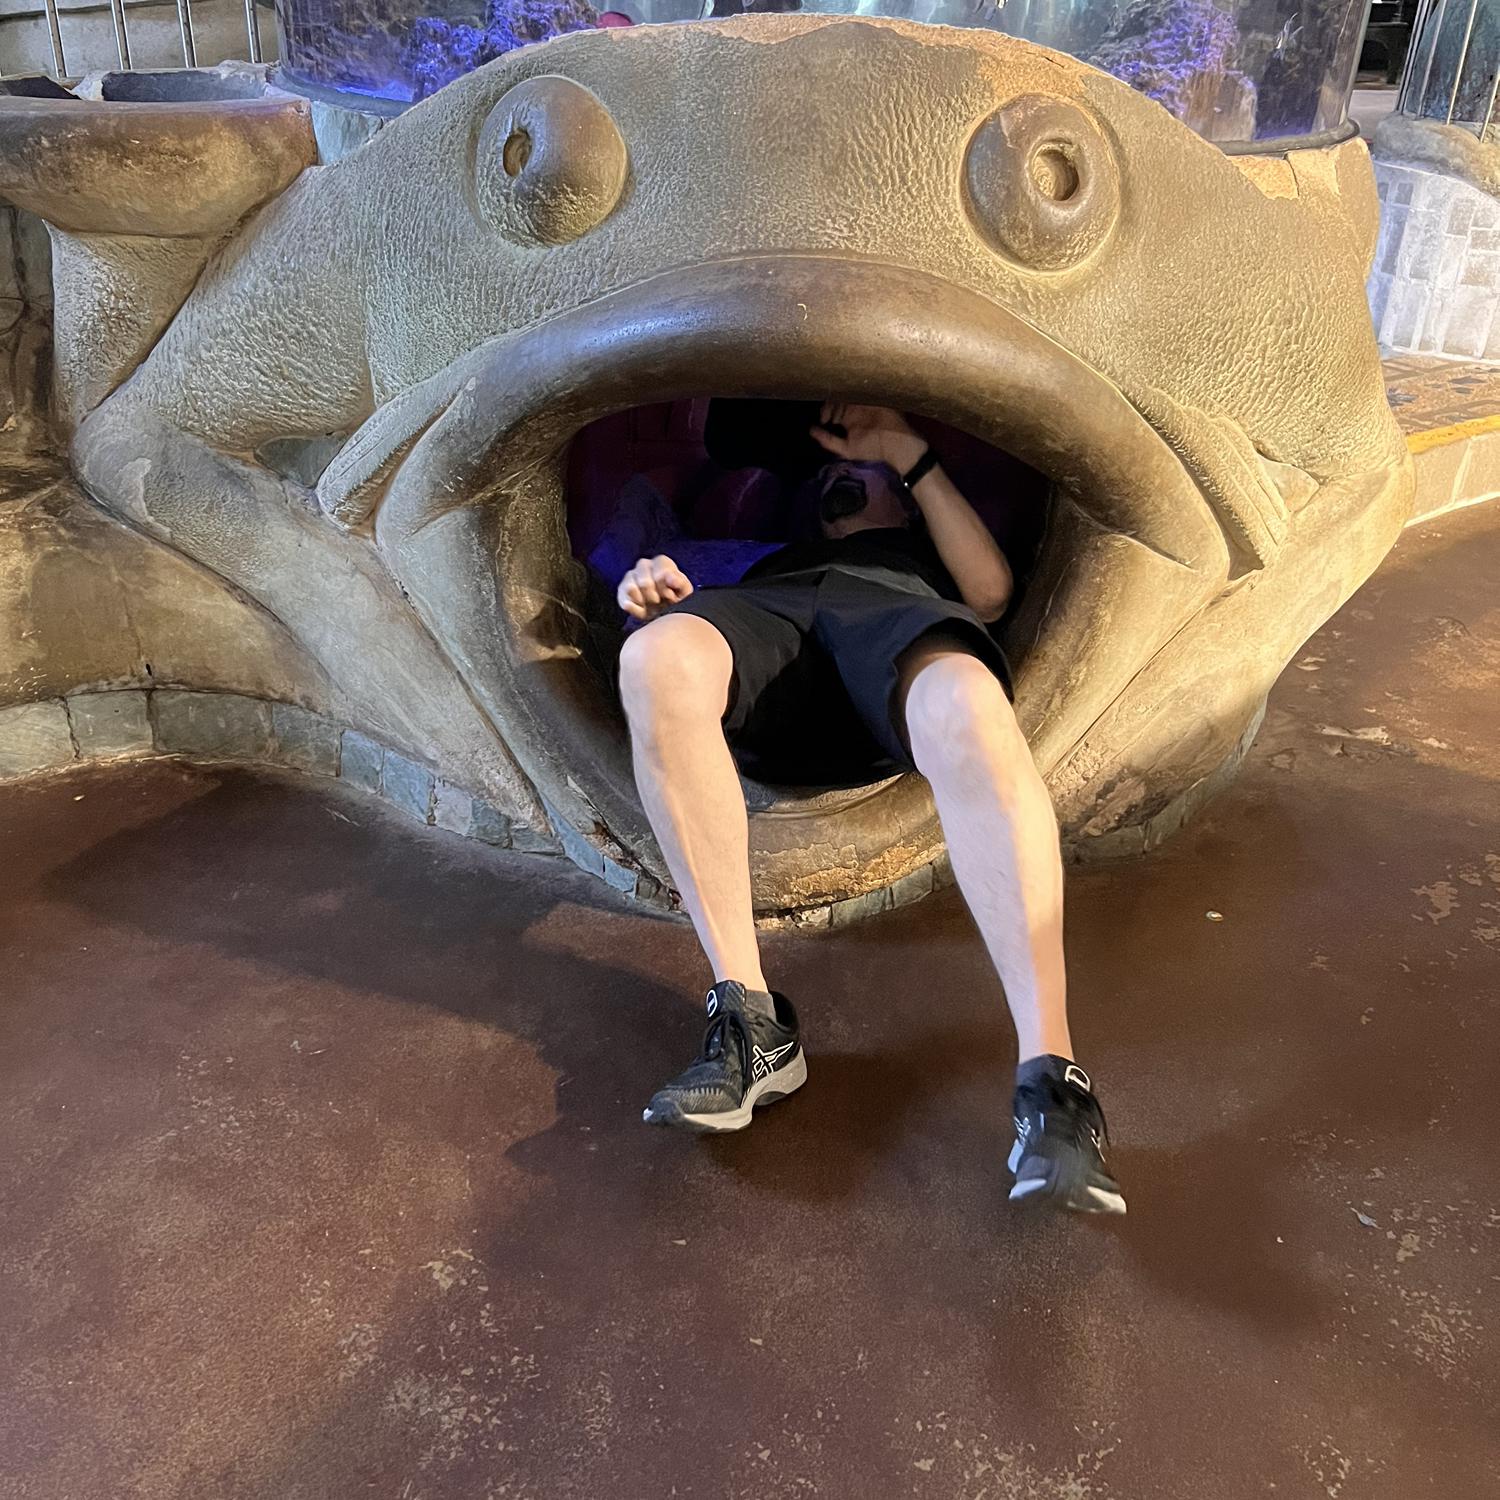 Jon crawling into an interactive aquarium